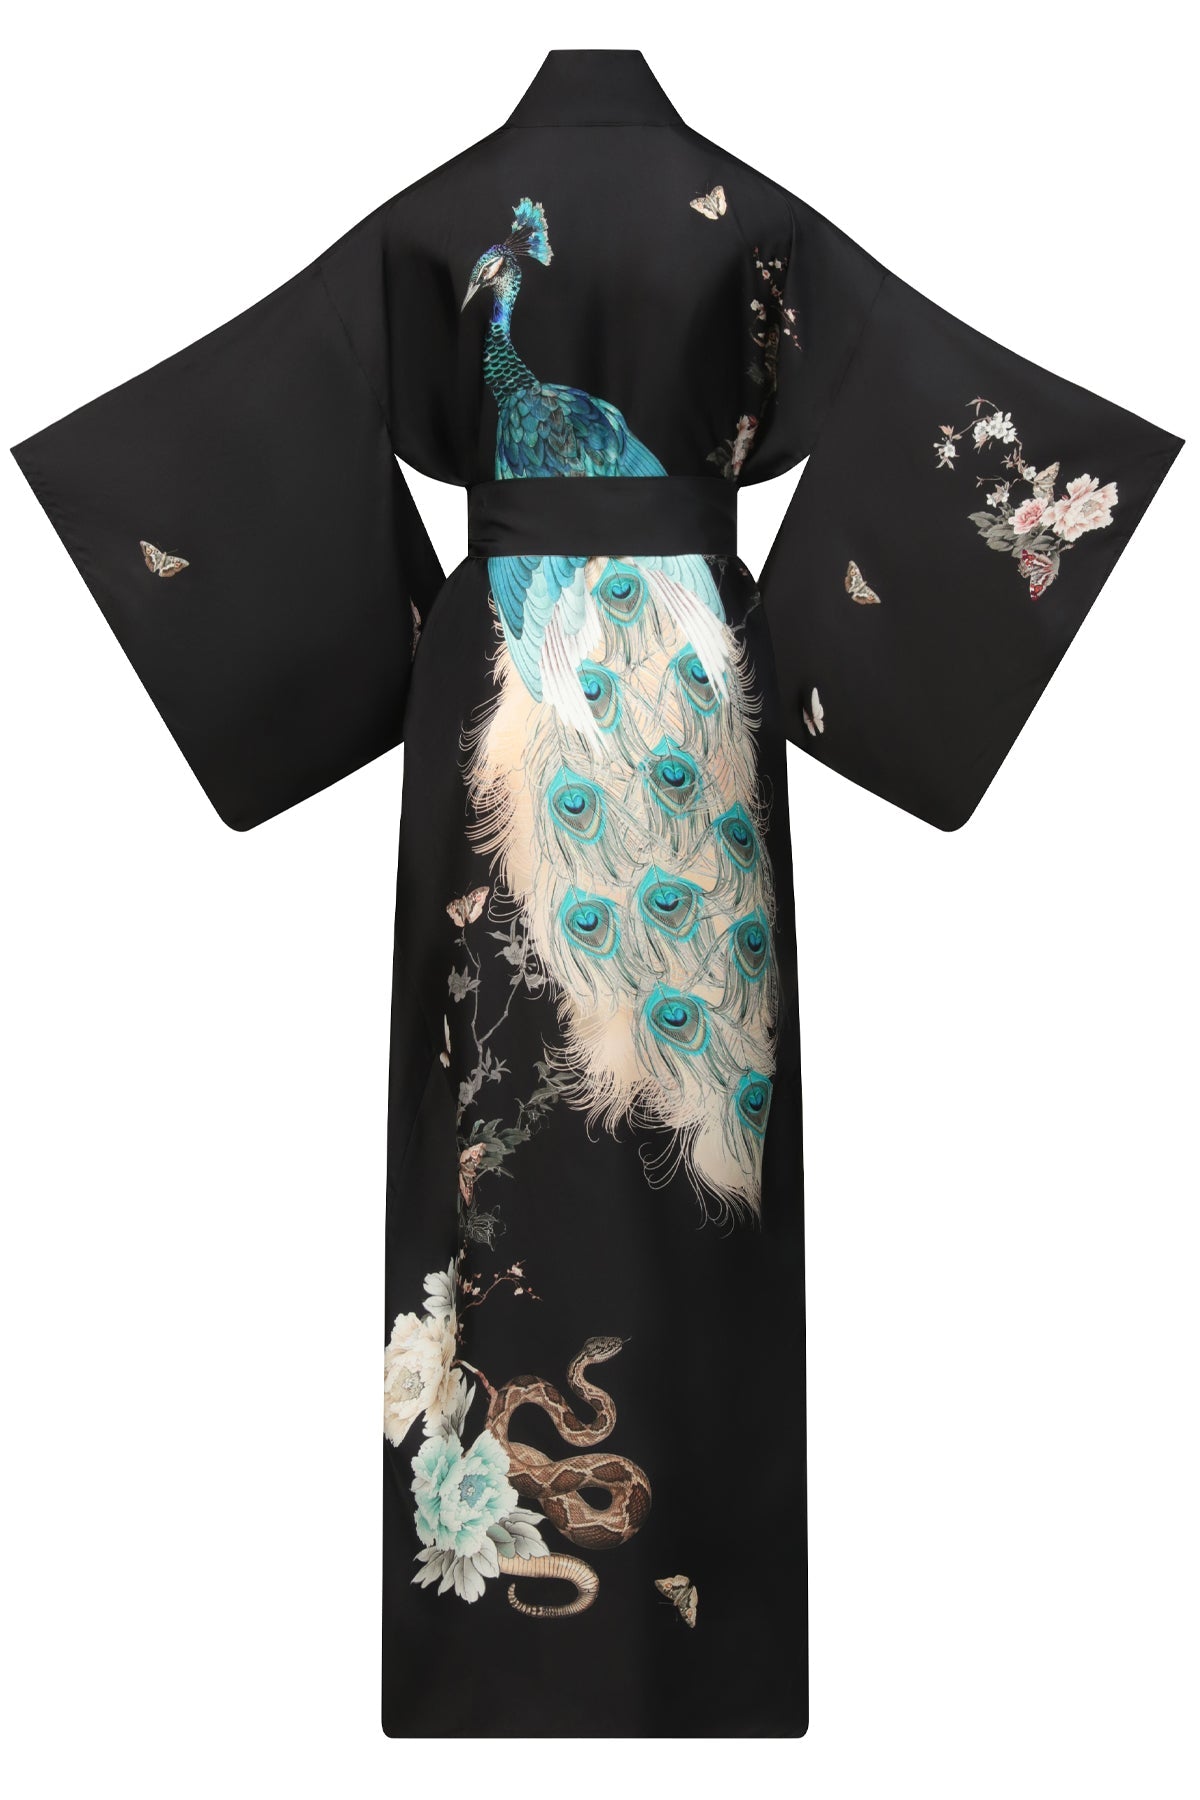 Silk Kimono Dressing Gown Royal Peacock | Black